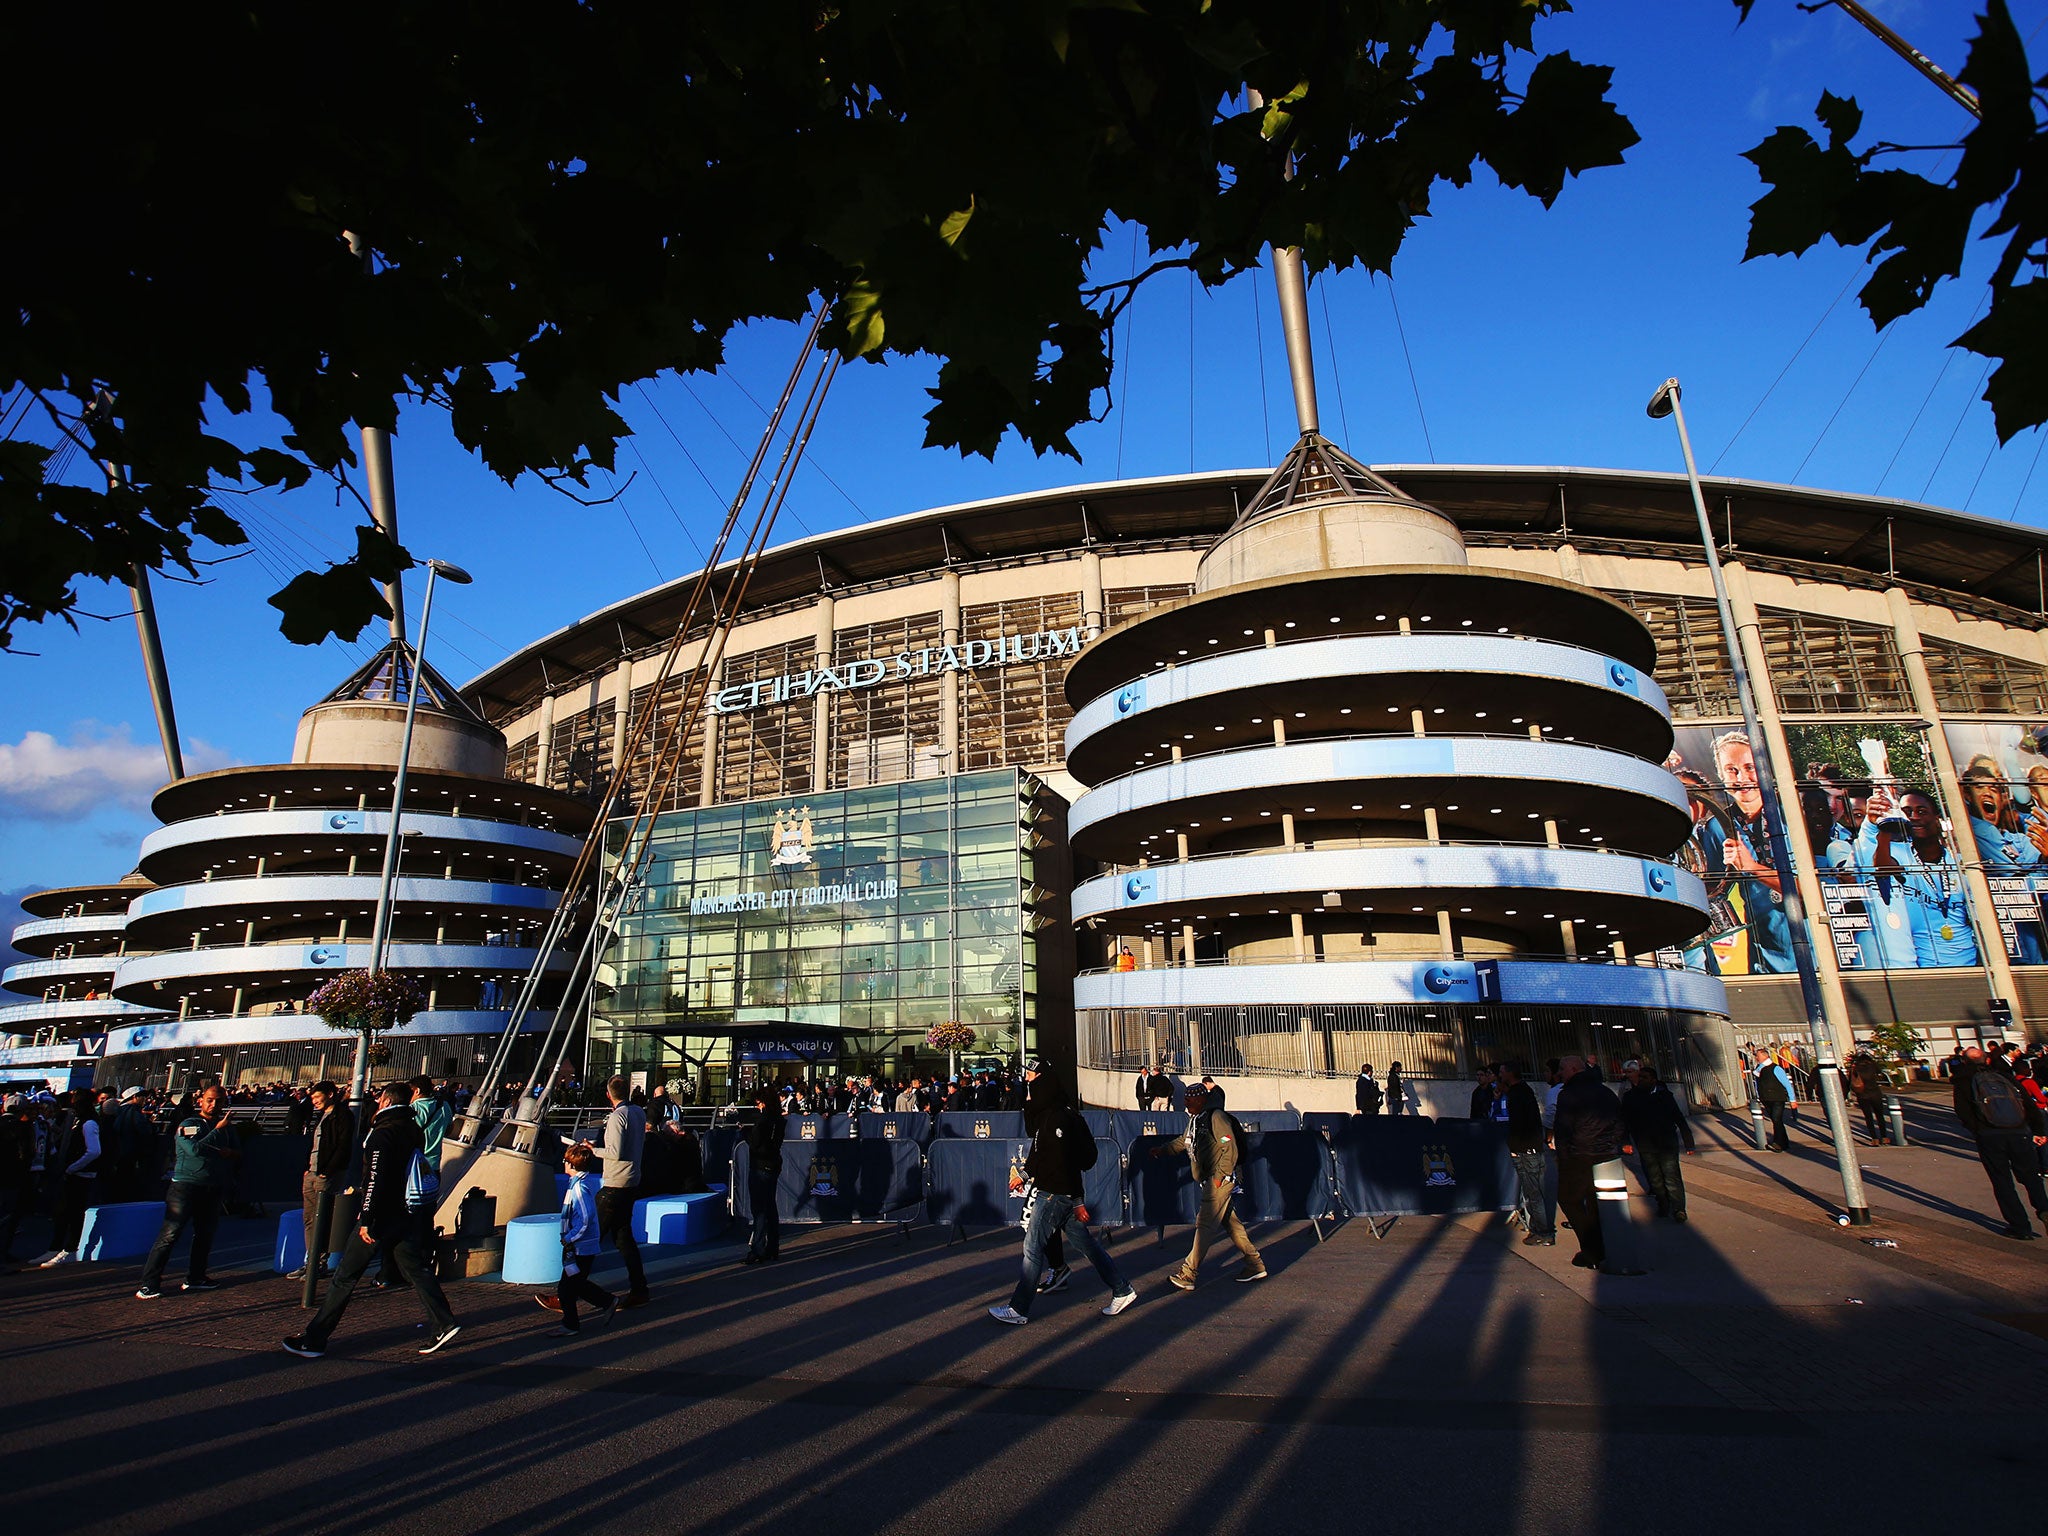 A view of Manchester City's Etihad Stadium